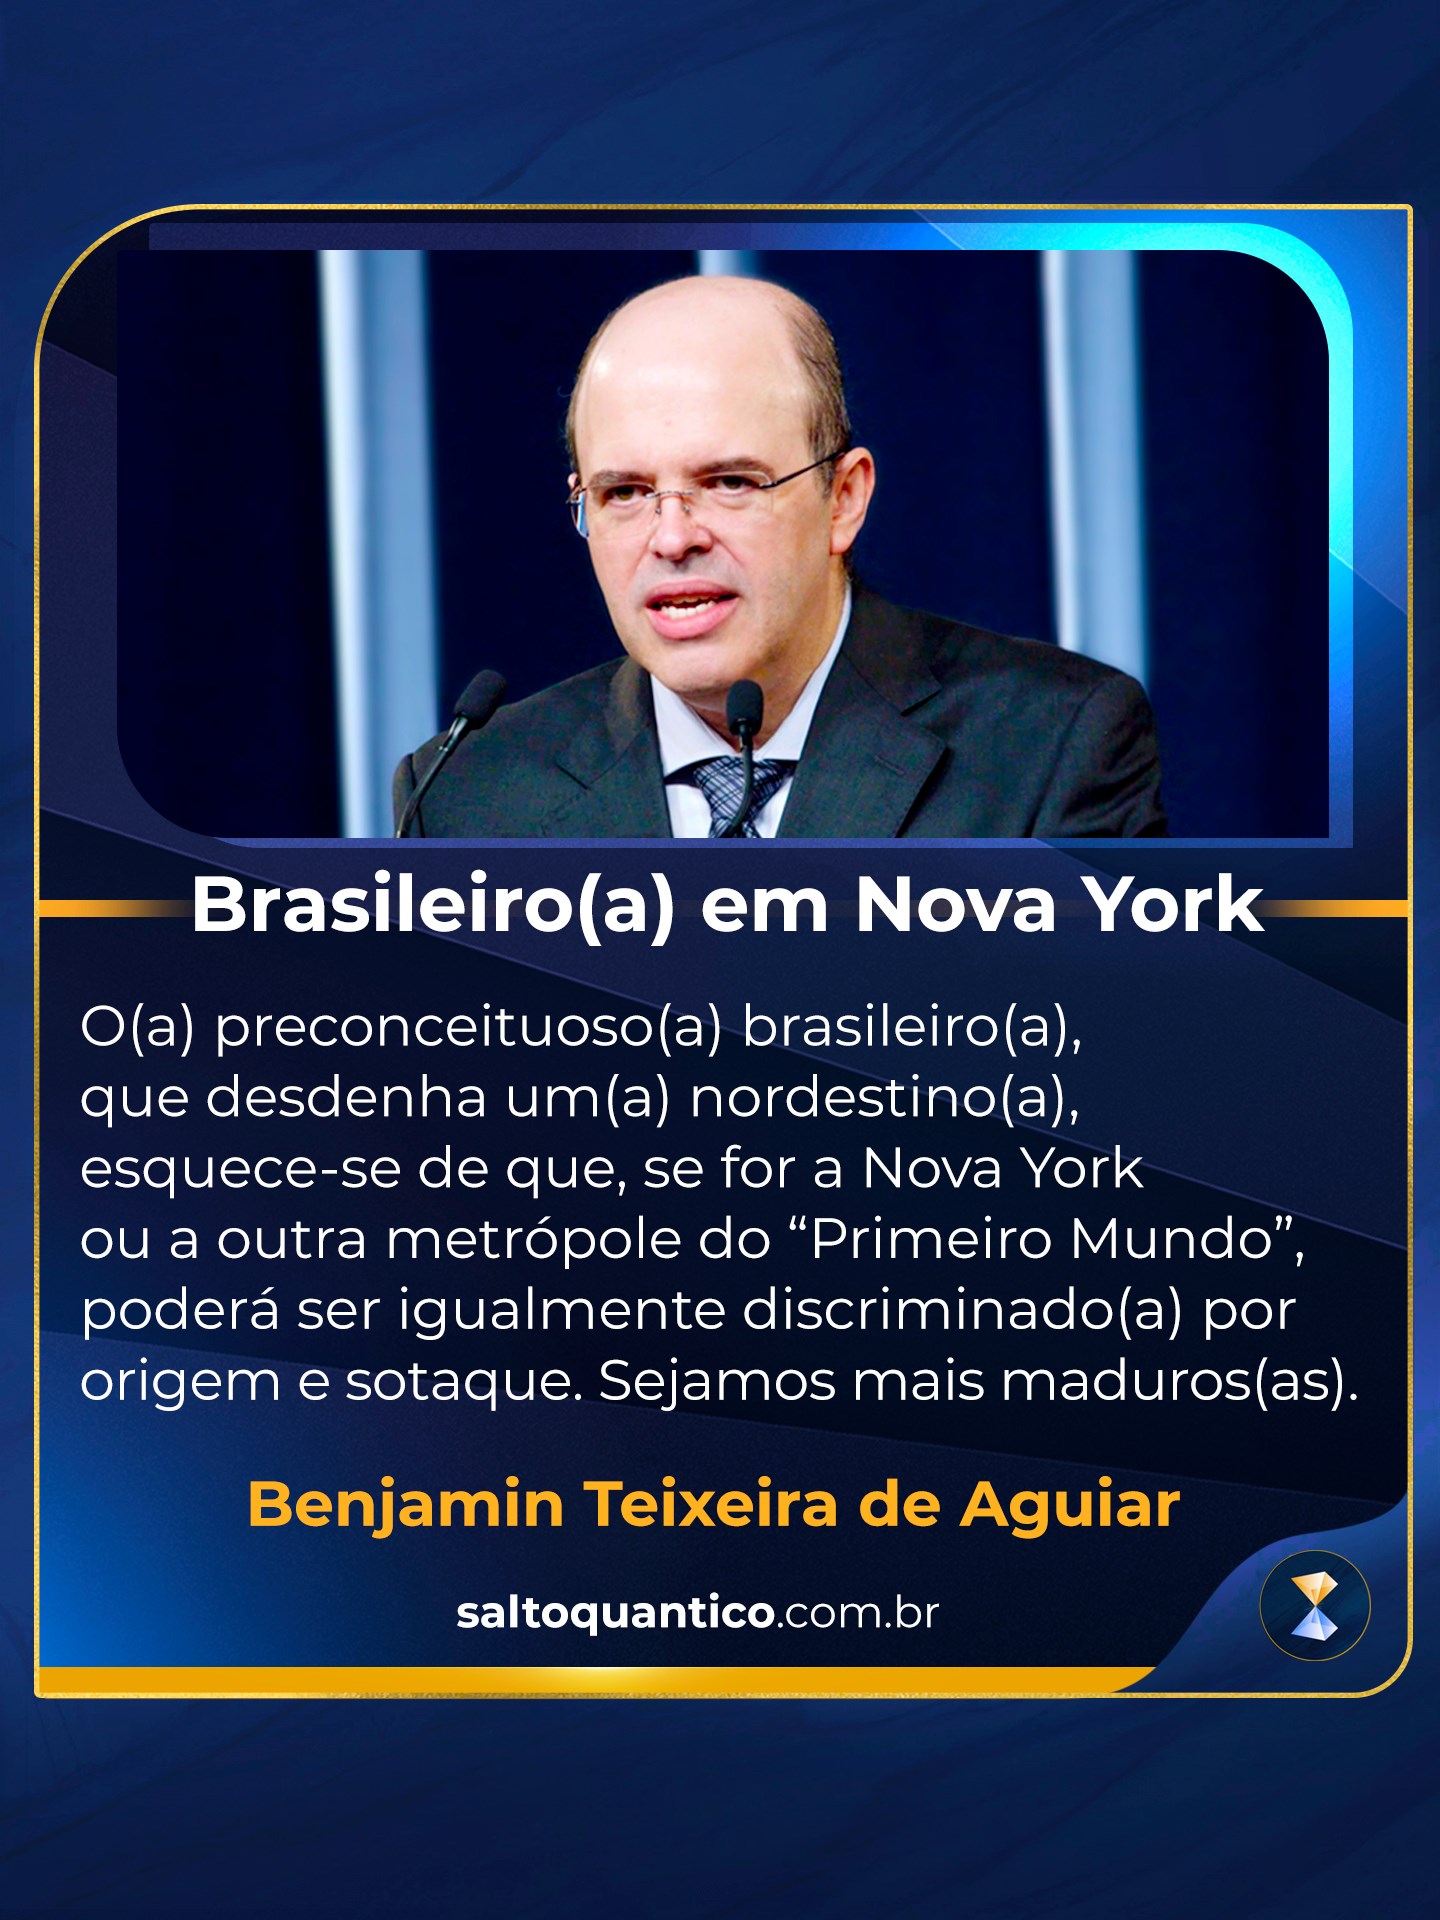 Brasileiro em Nova York